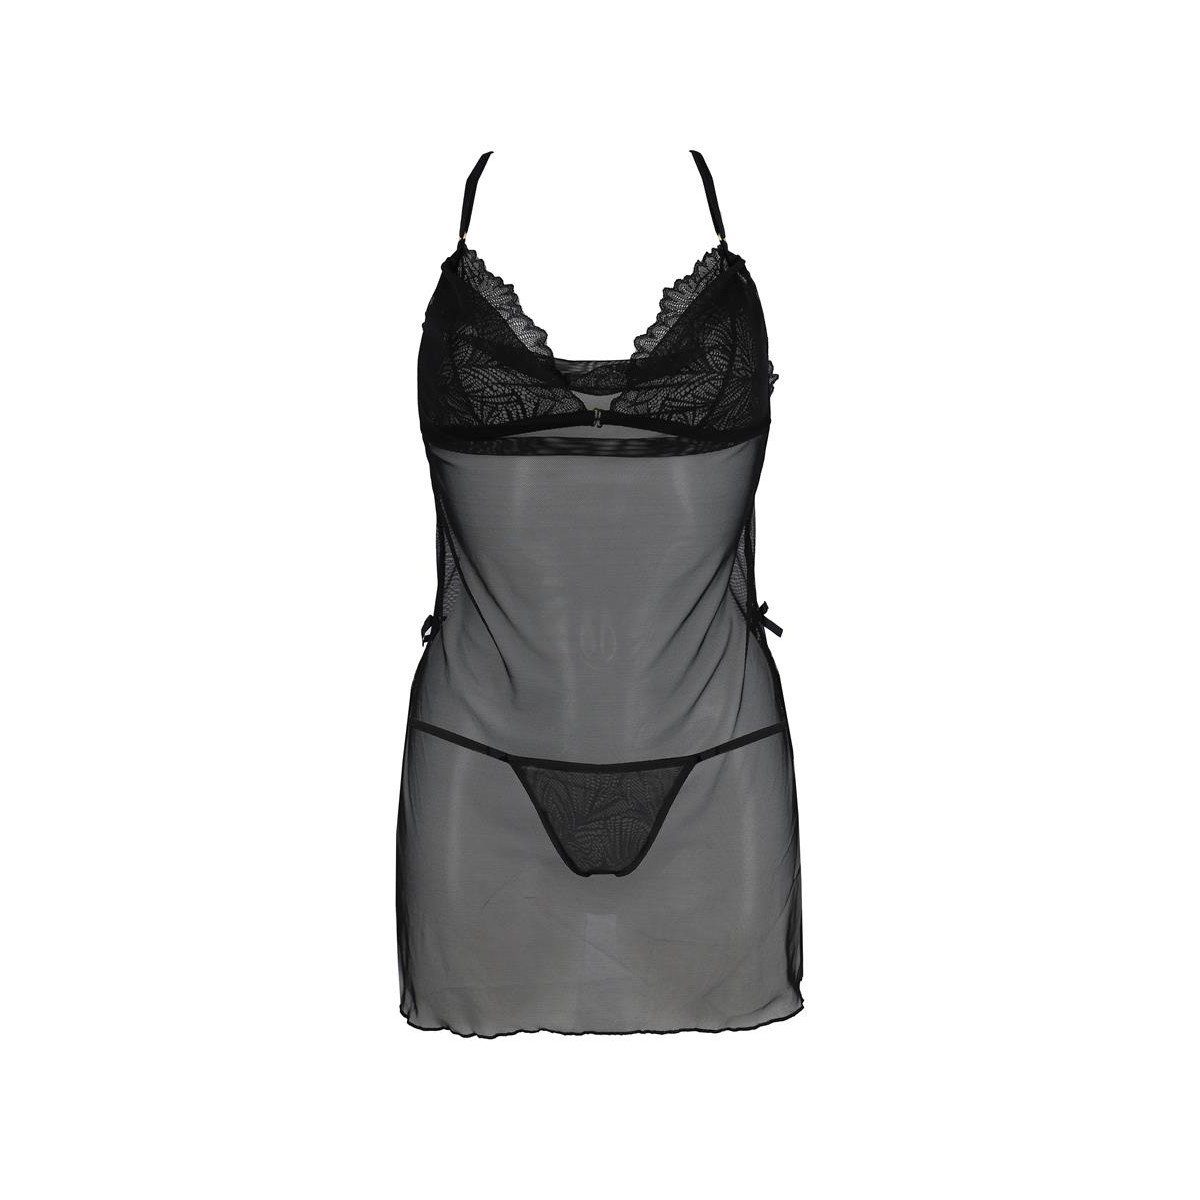 Deliena chemise PE - (L/XL,S/M) Passion-Exklusiv black Nachthemd